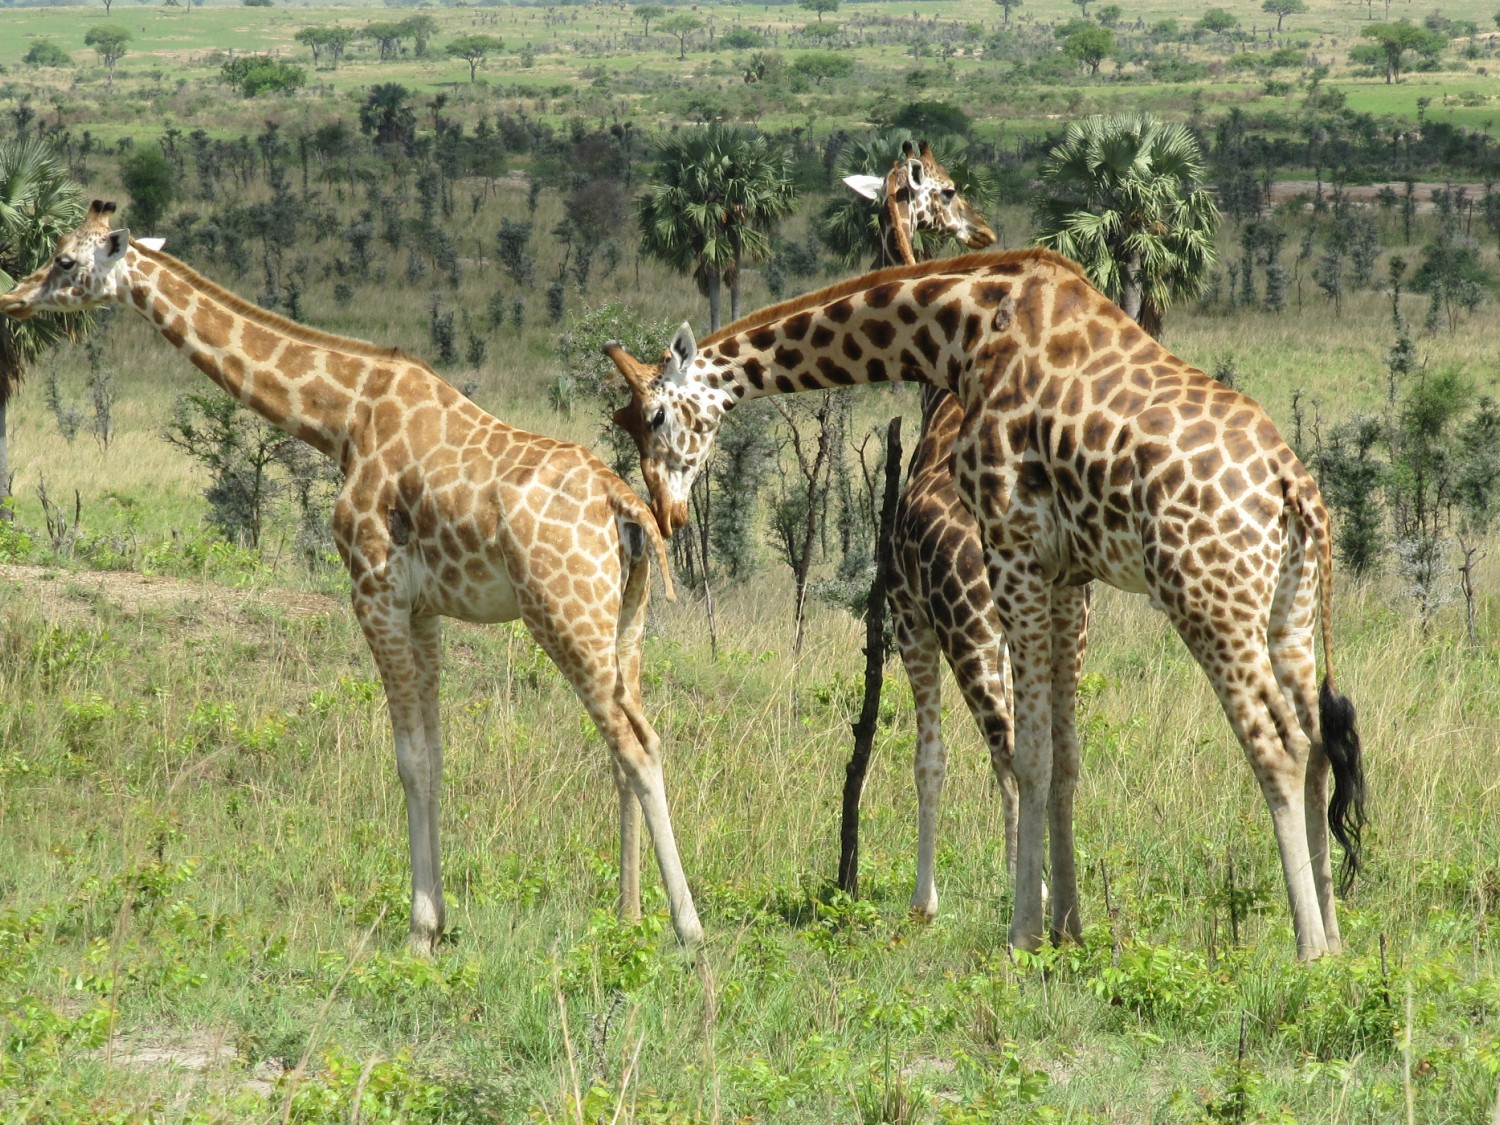 Rothschild giraffe in Waza national Park